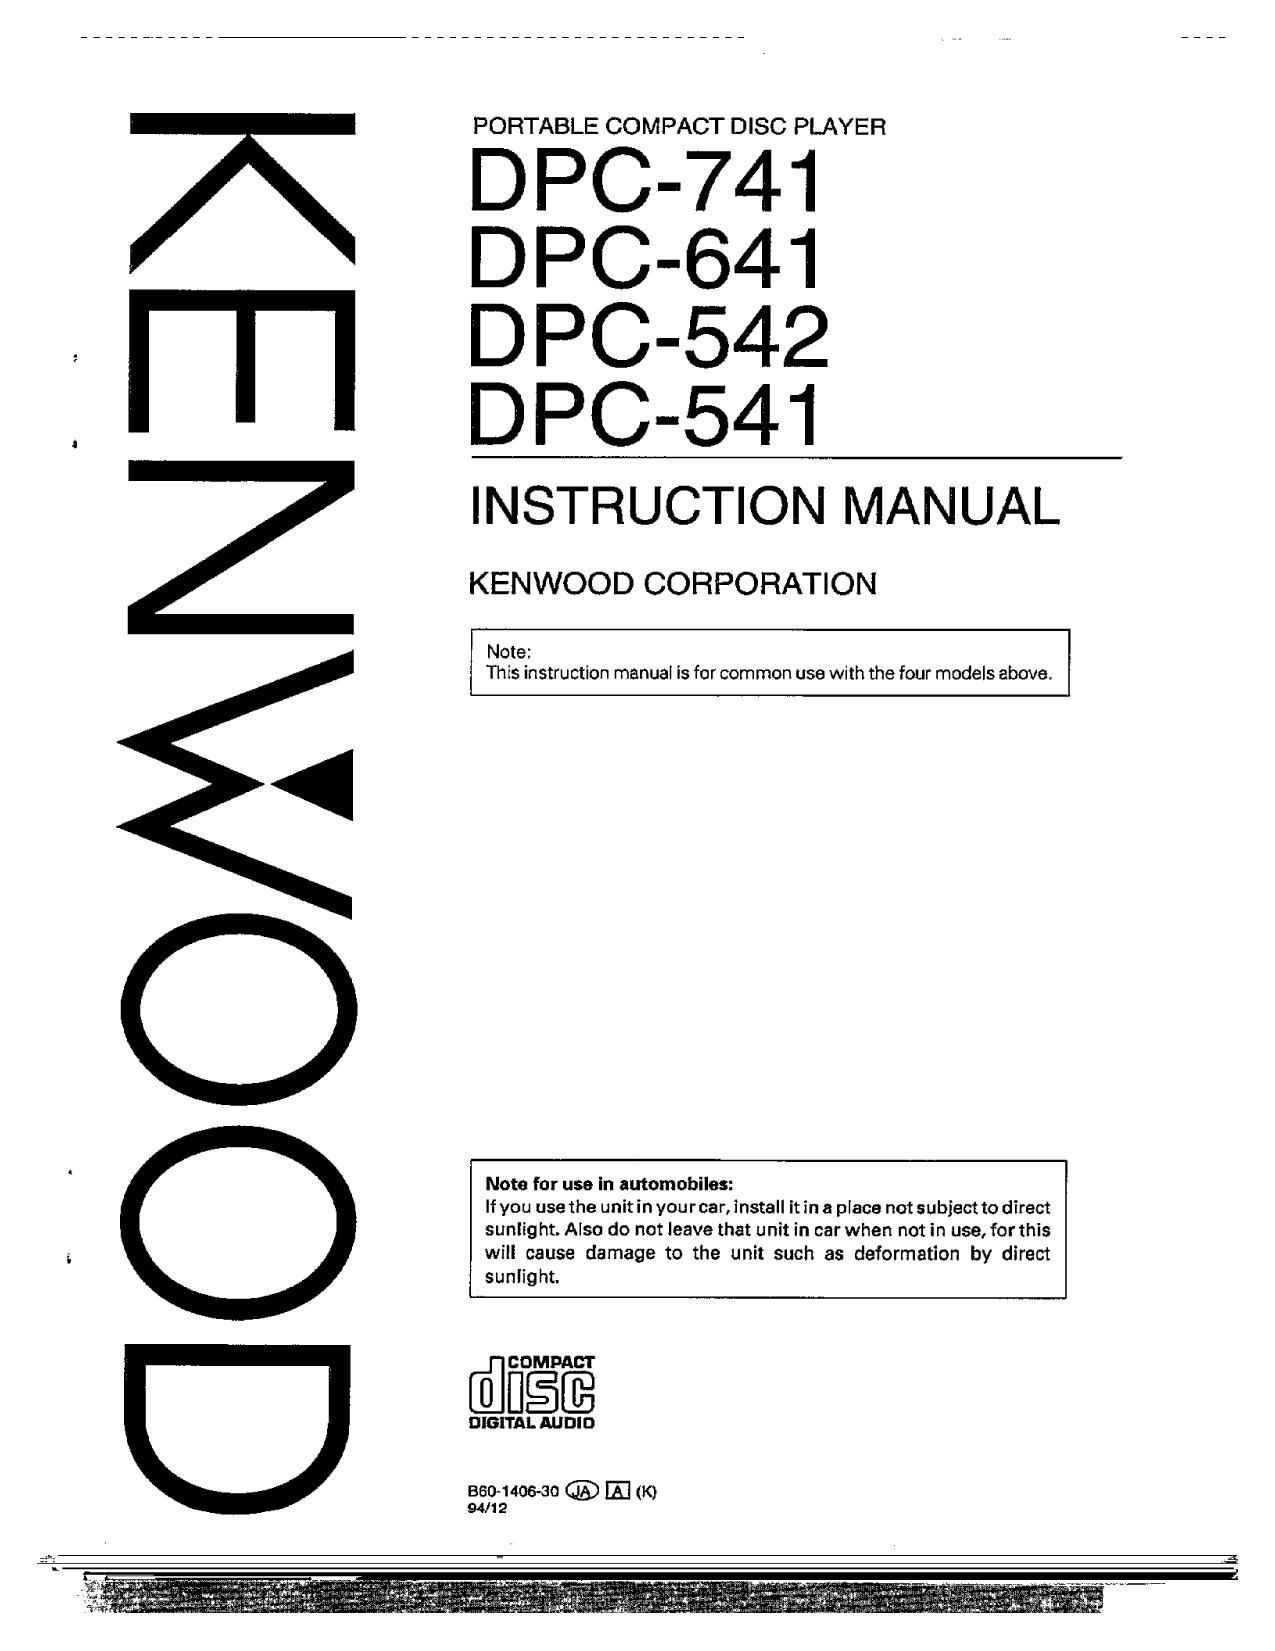 Kenwood DPC 641 Owners Manual